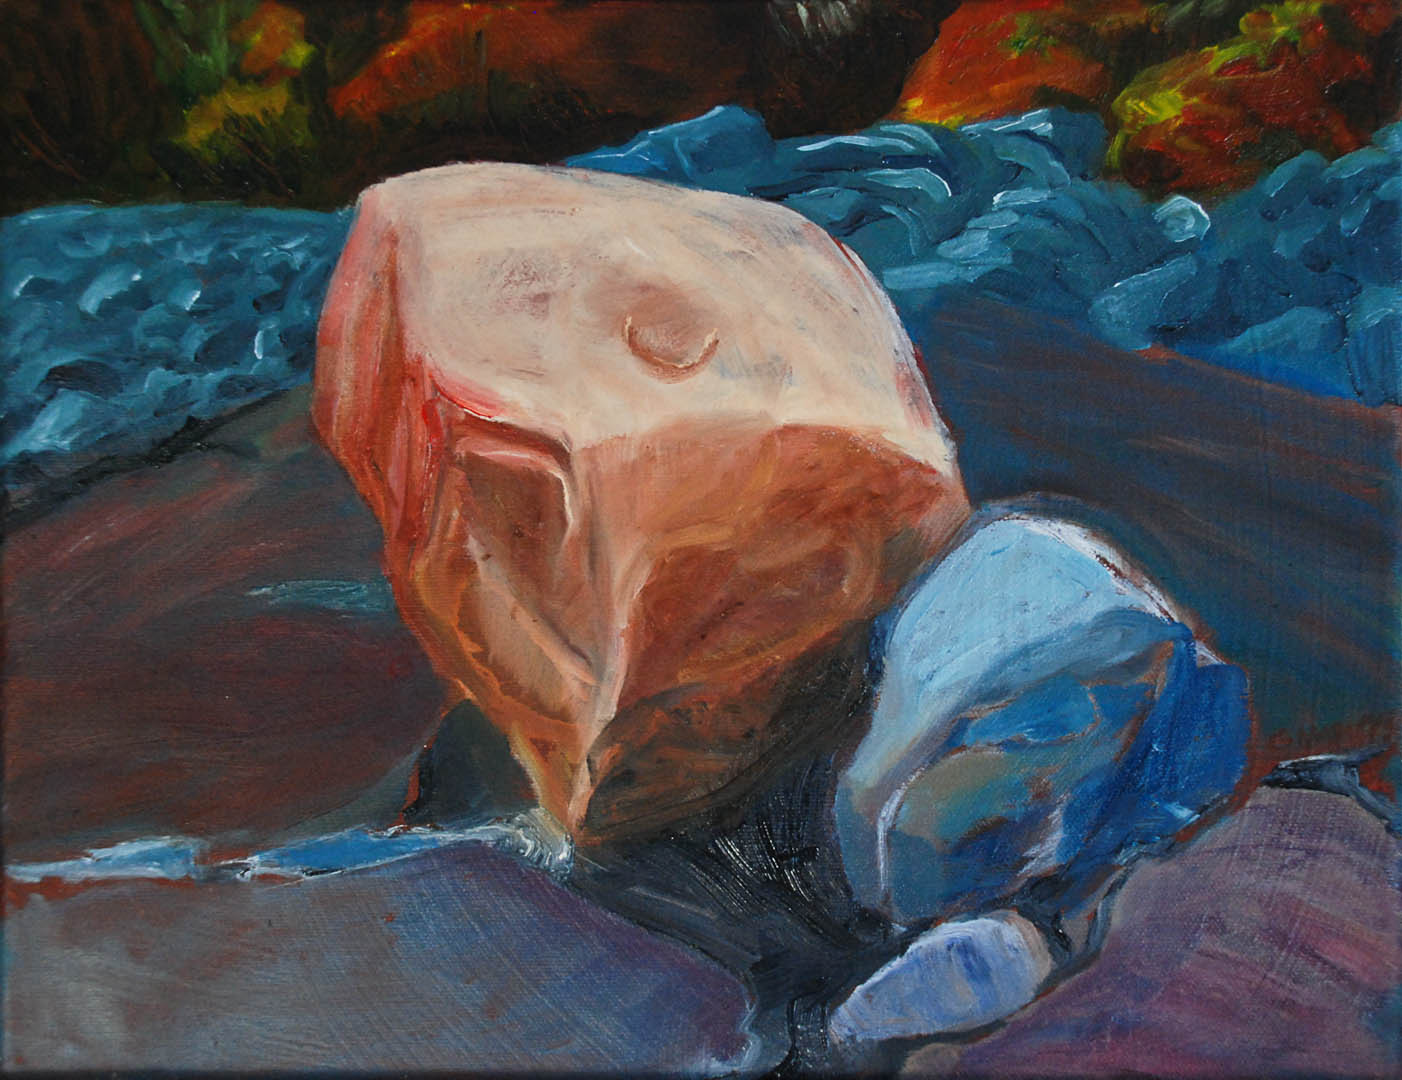 05 Eagle Rocks, Oil on canvas 11x14" $900